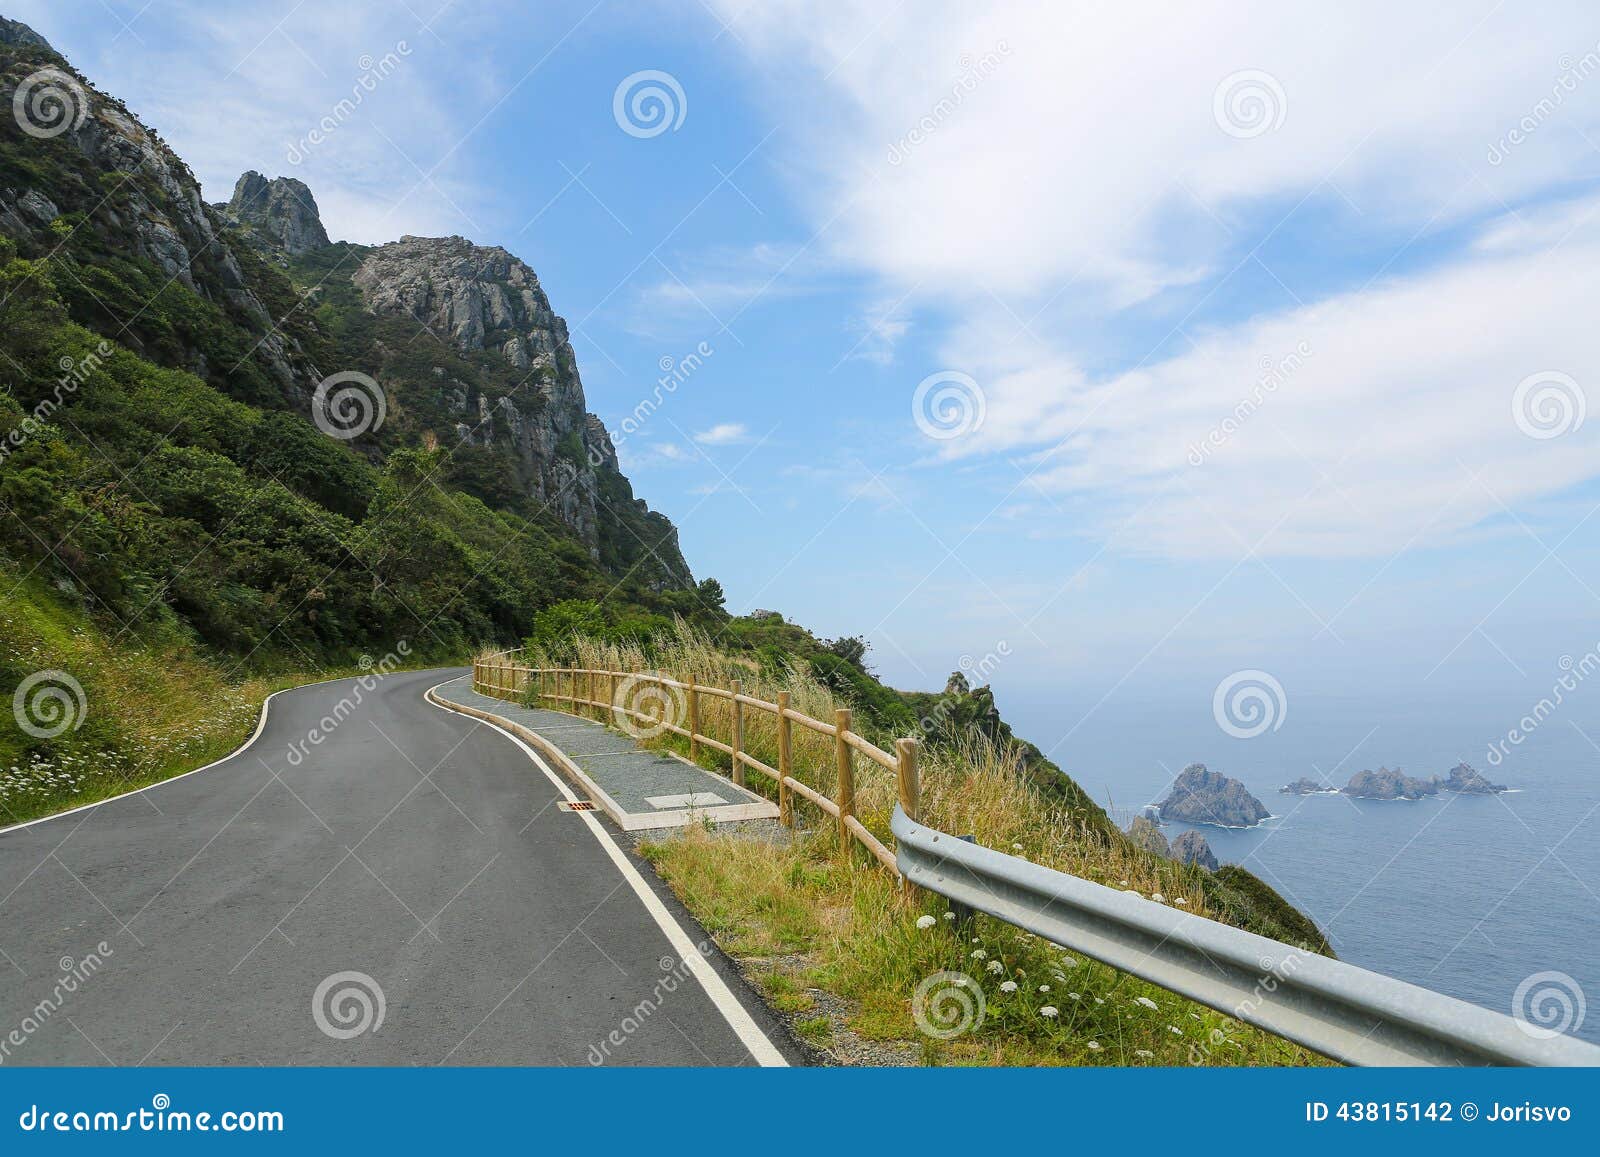 cliff road in galicia